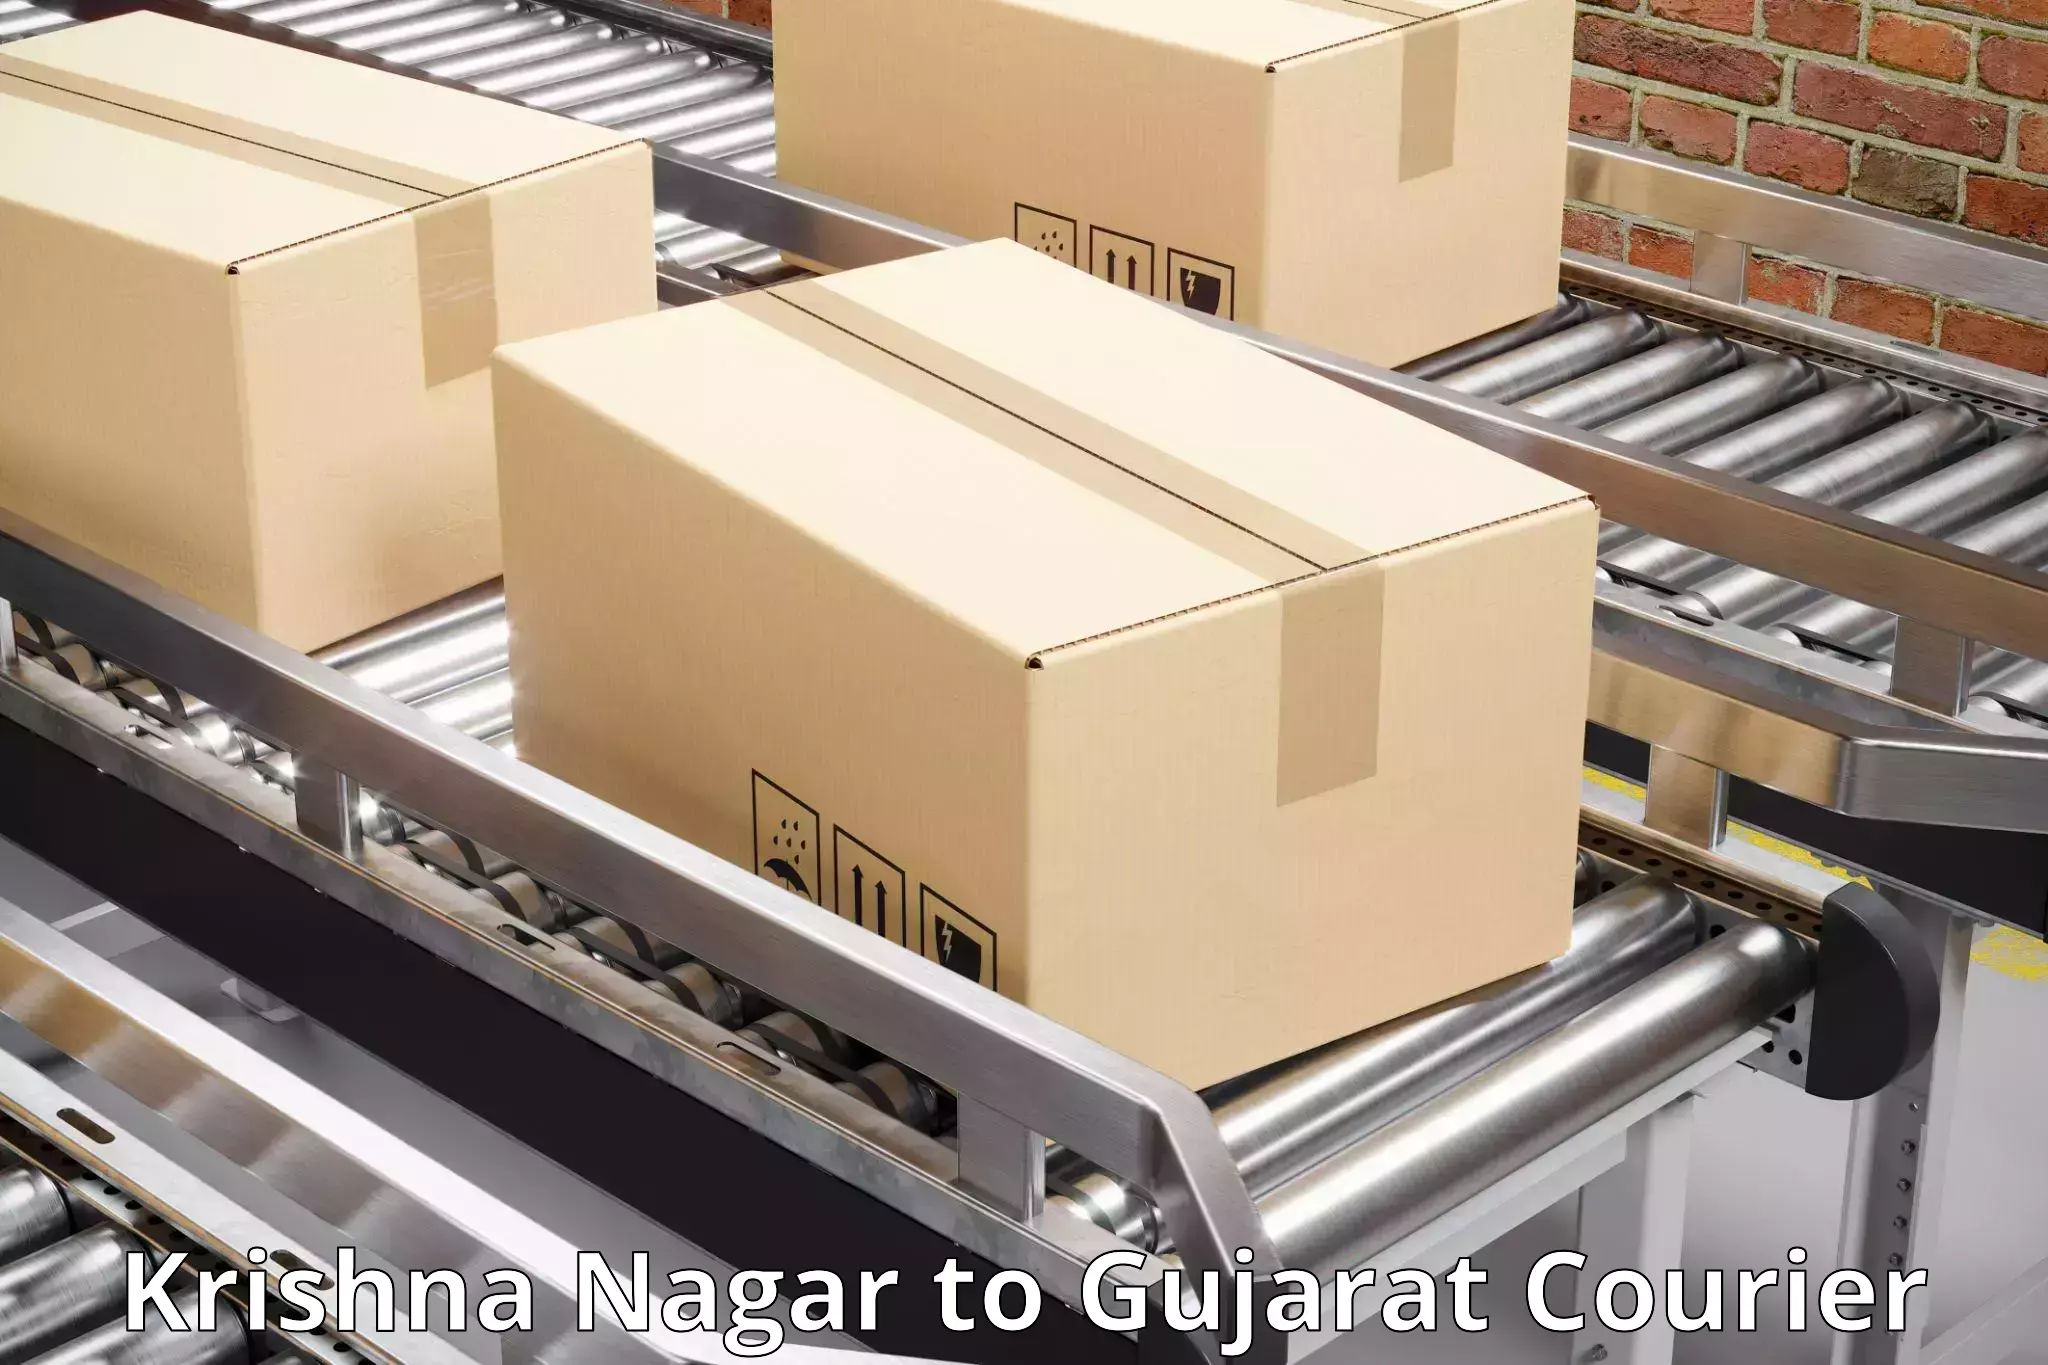 Express delivery capabilities Krishna Nagar to Gujarat